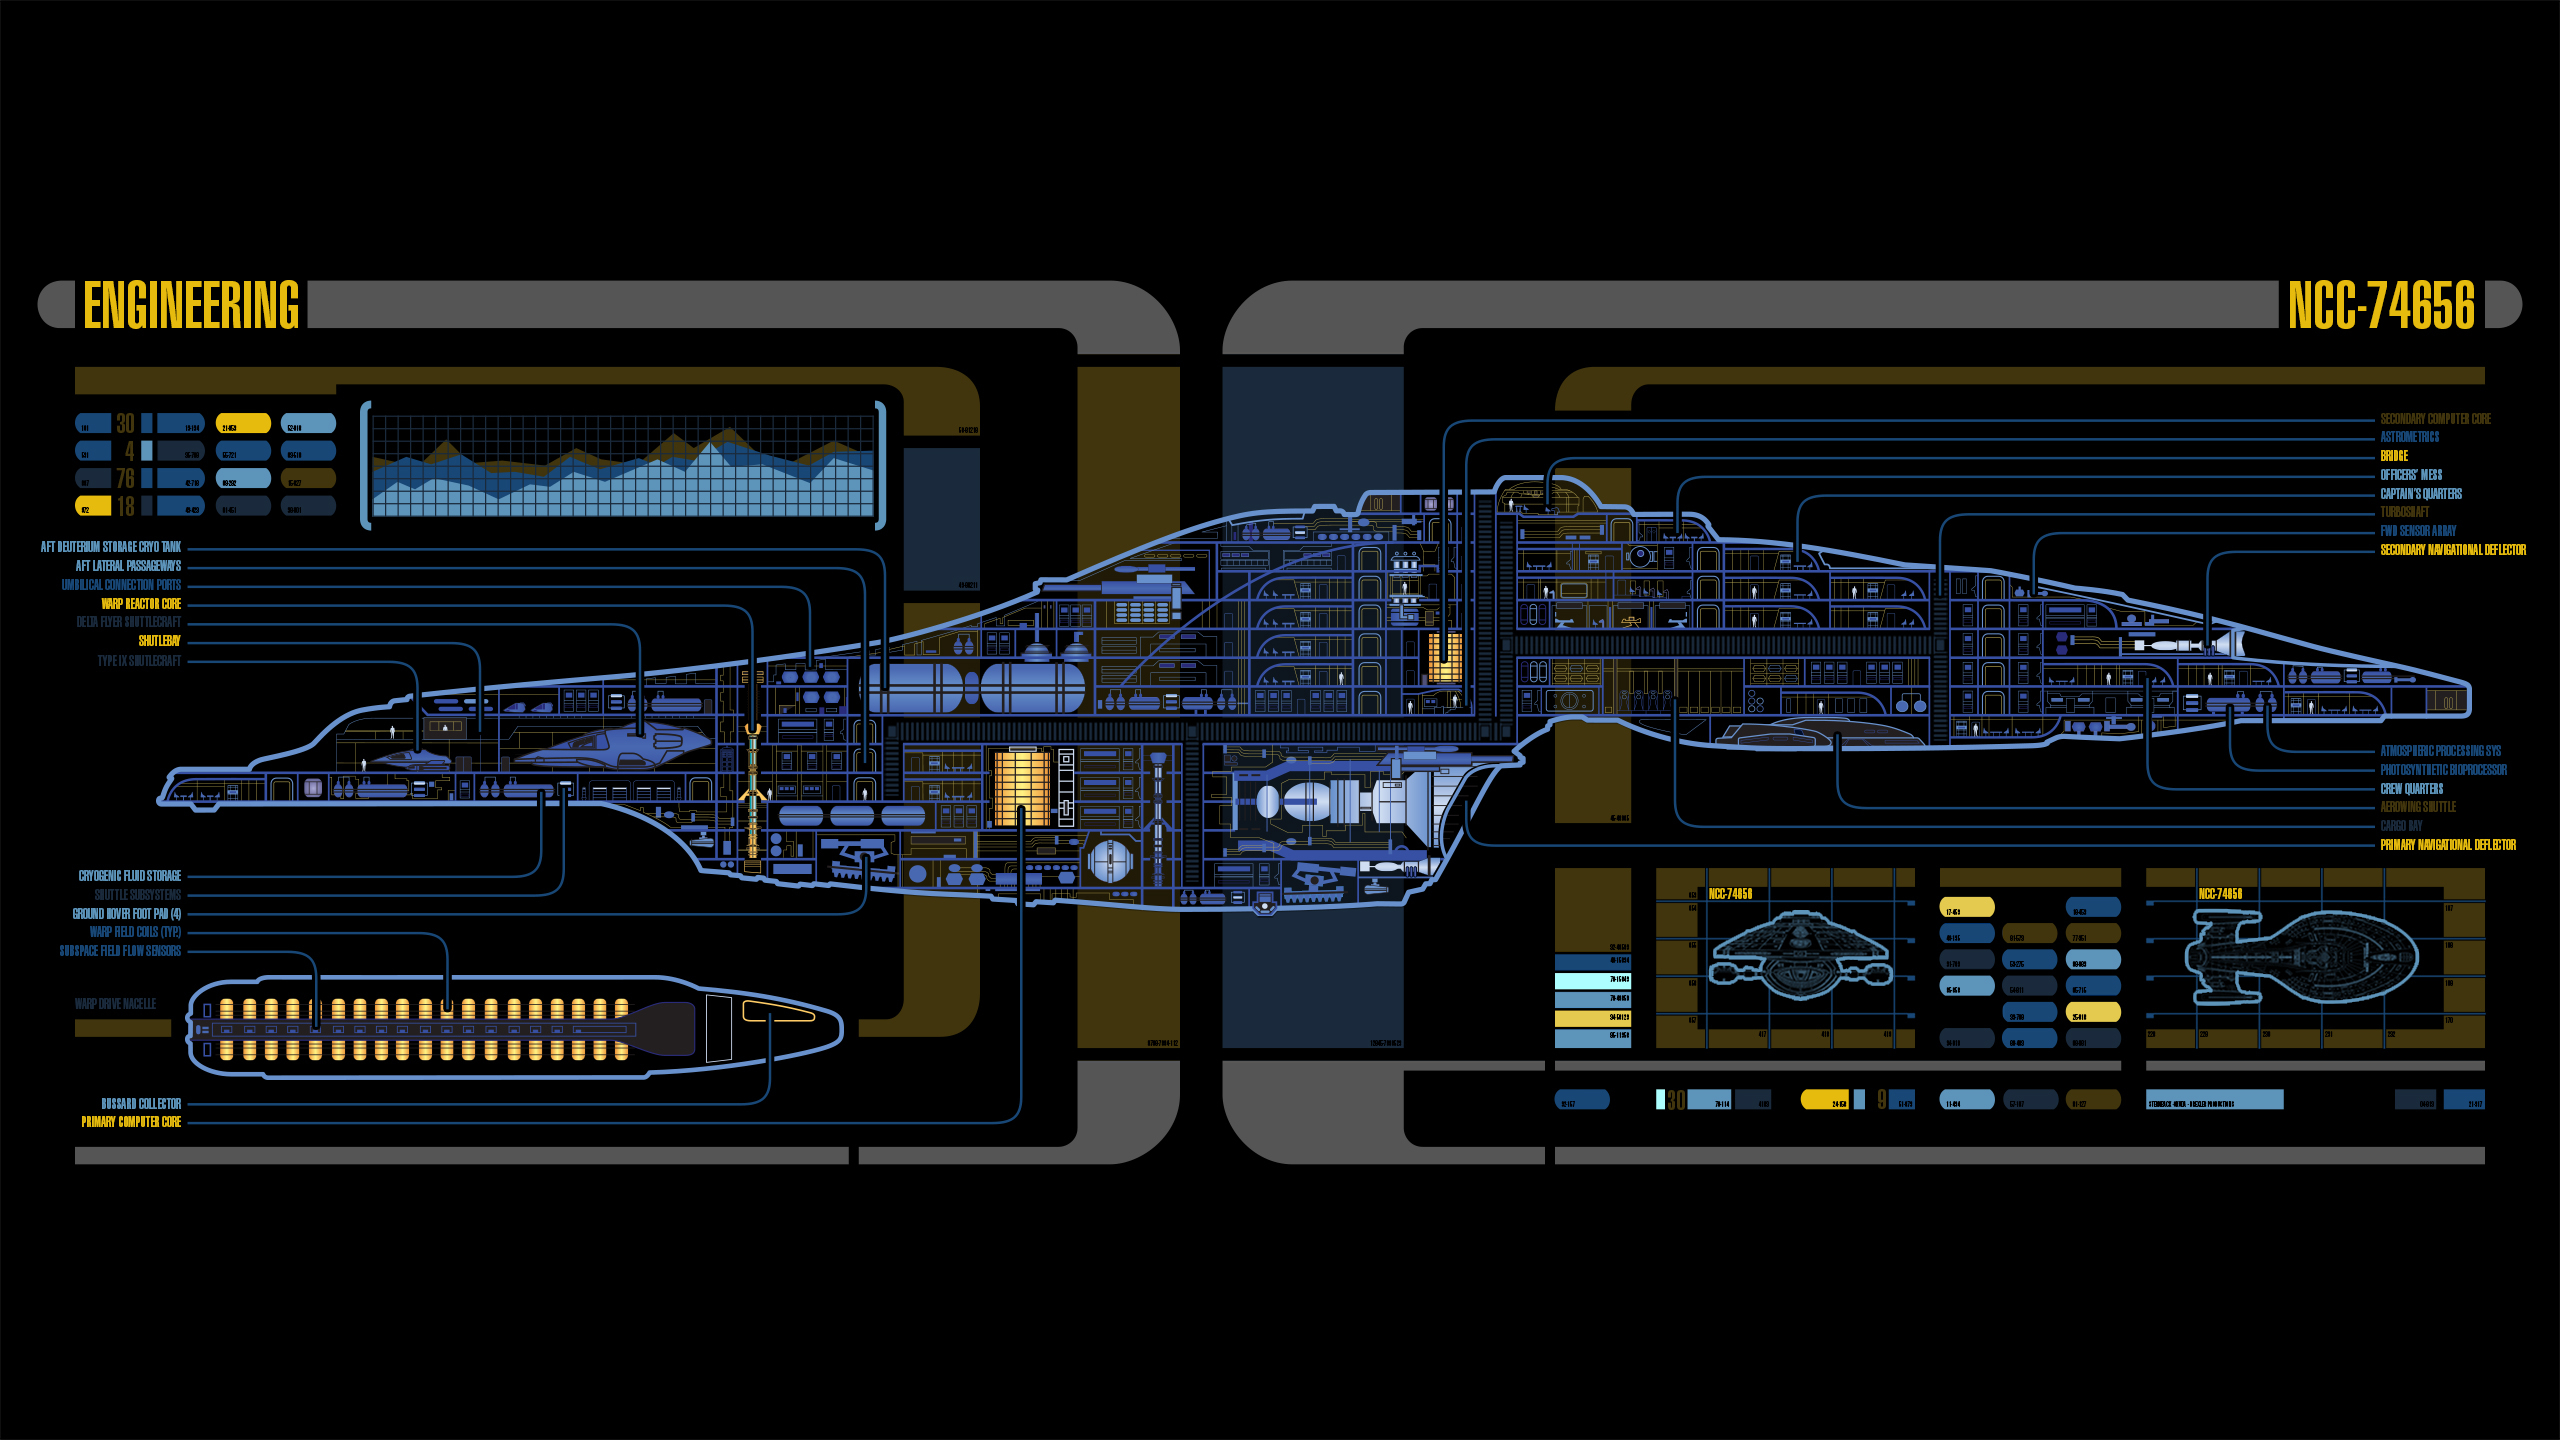 2560x1440 Wallpaper : Star Trek, USS Voyager, LCARS skryerx 1933171 HD Wallpapers